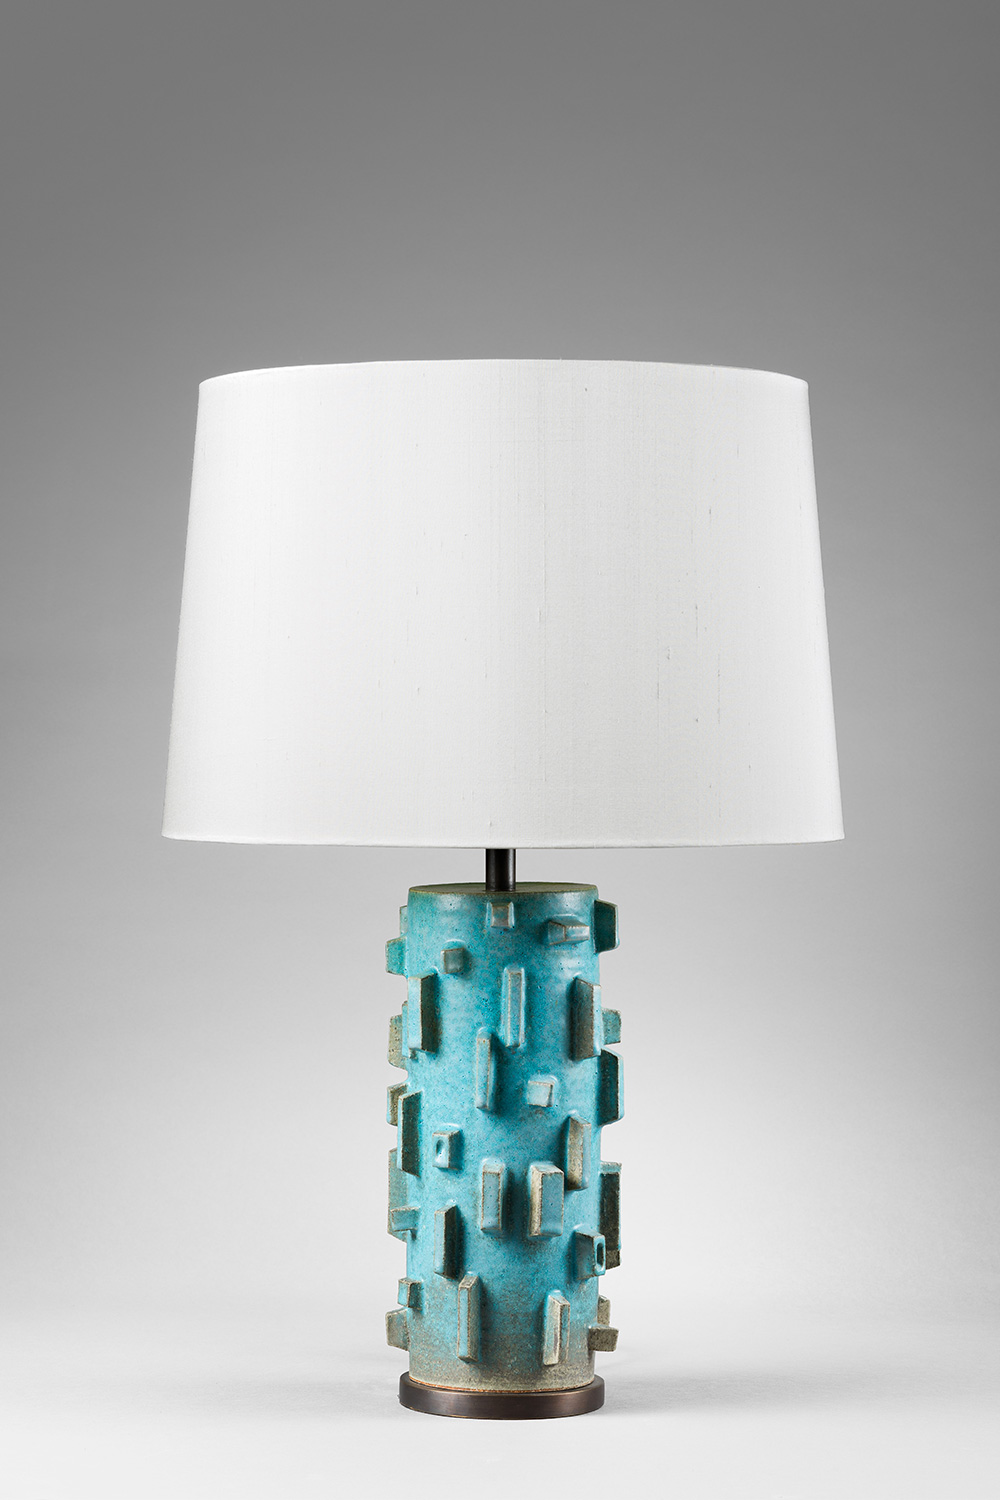 Small turquoise “Sandbar” lamp